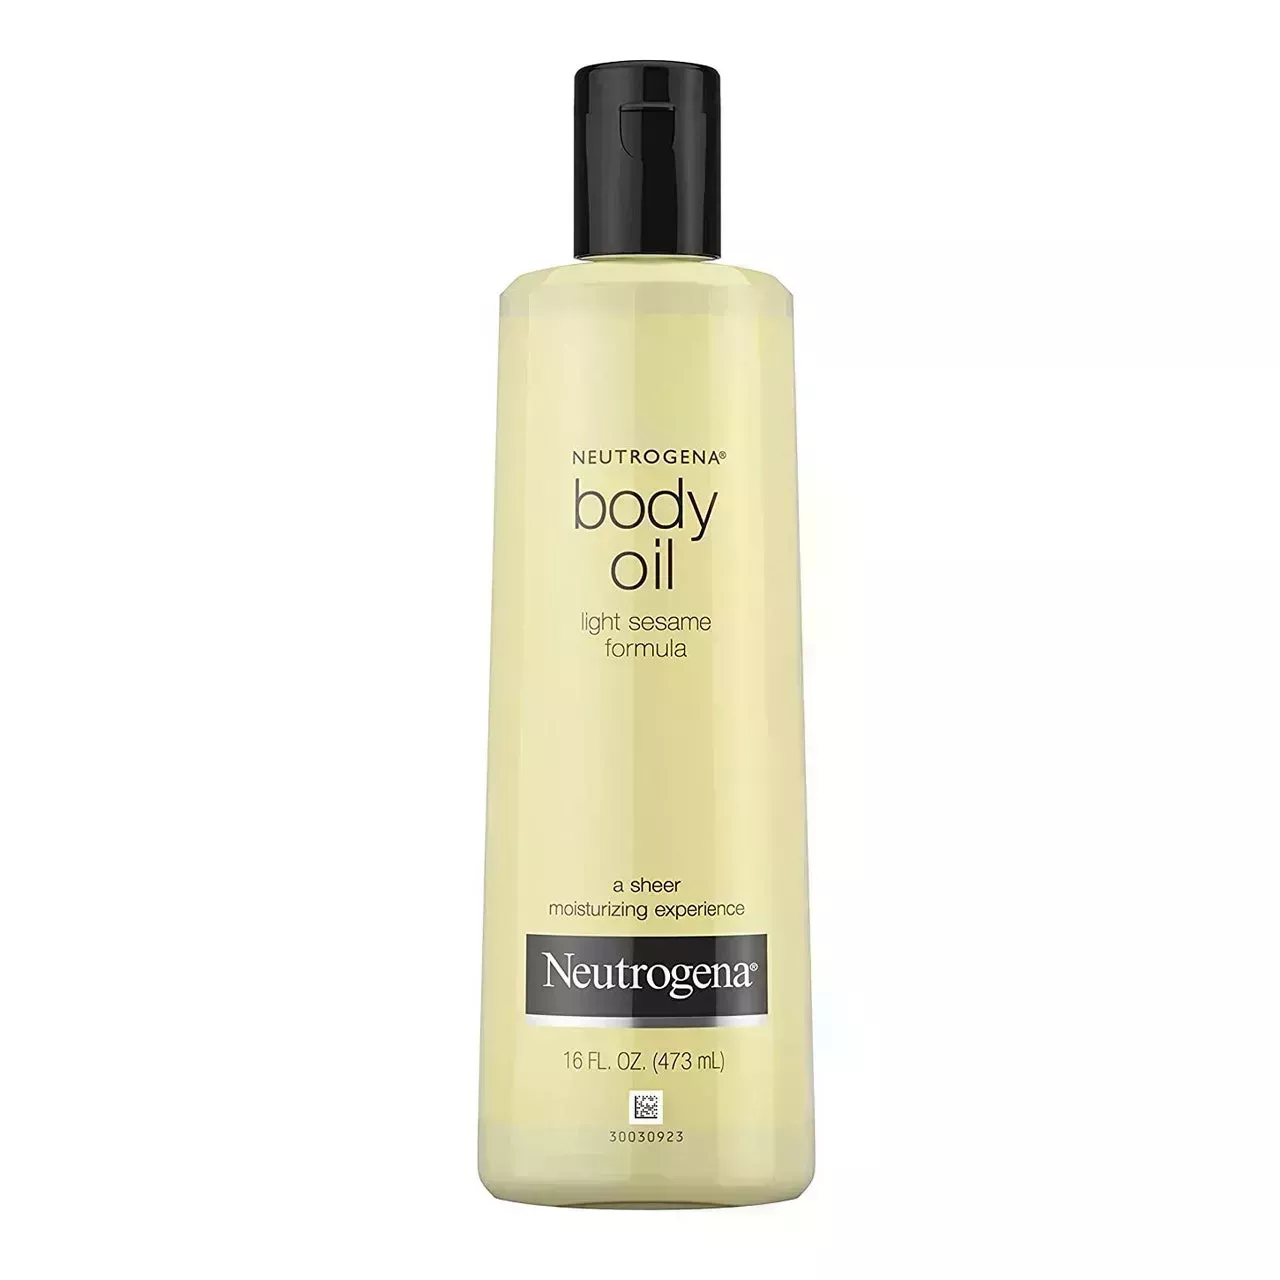 Neutrogena Body Oil bottle of pale yellow body oil with black cap on white background